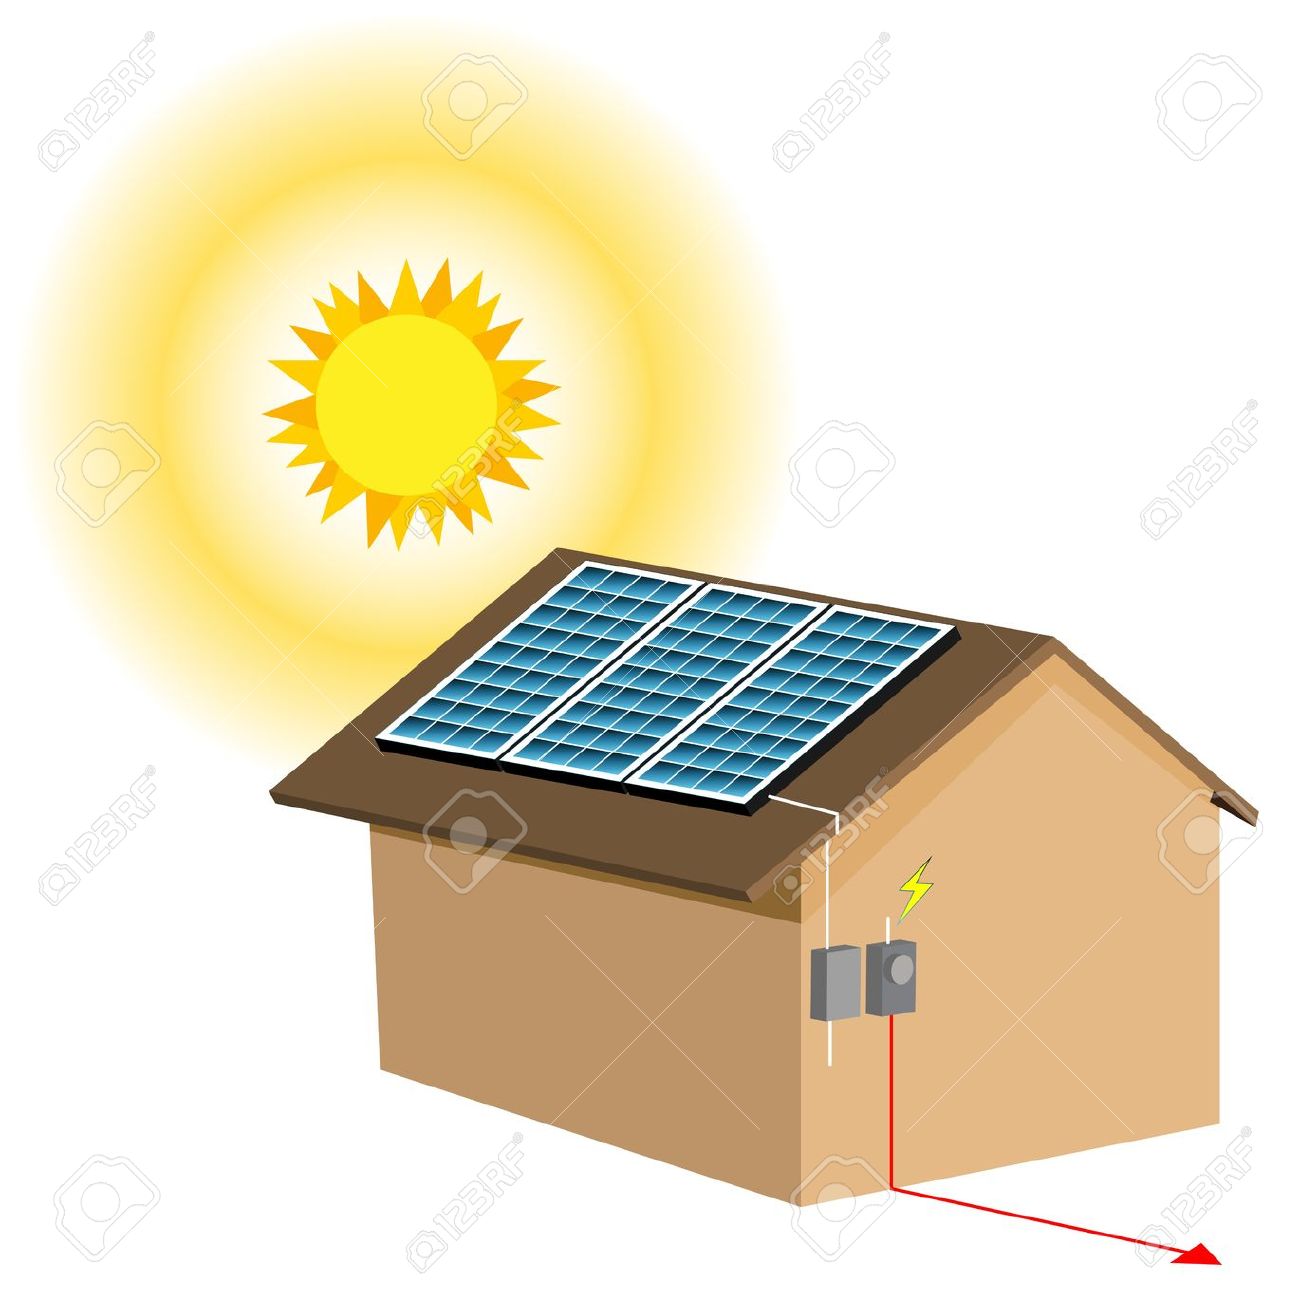 Solar panel clipart - Clipground